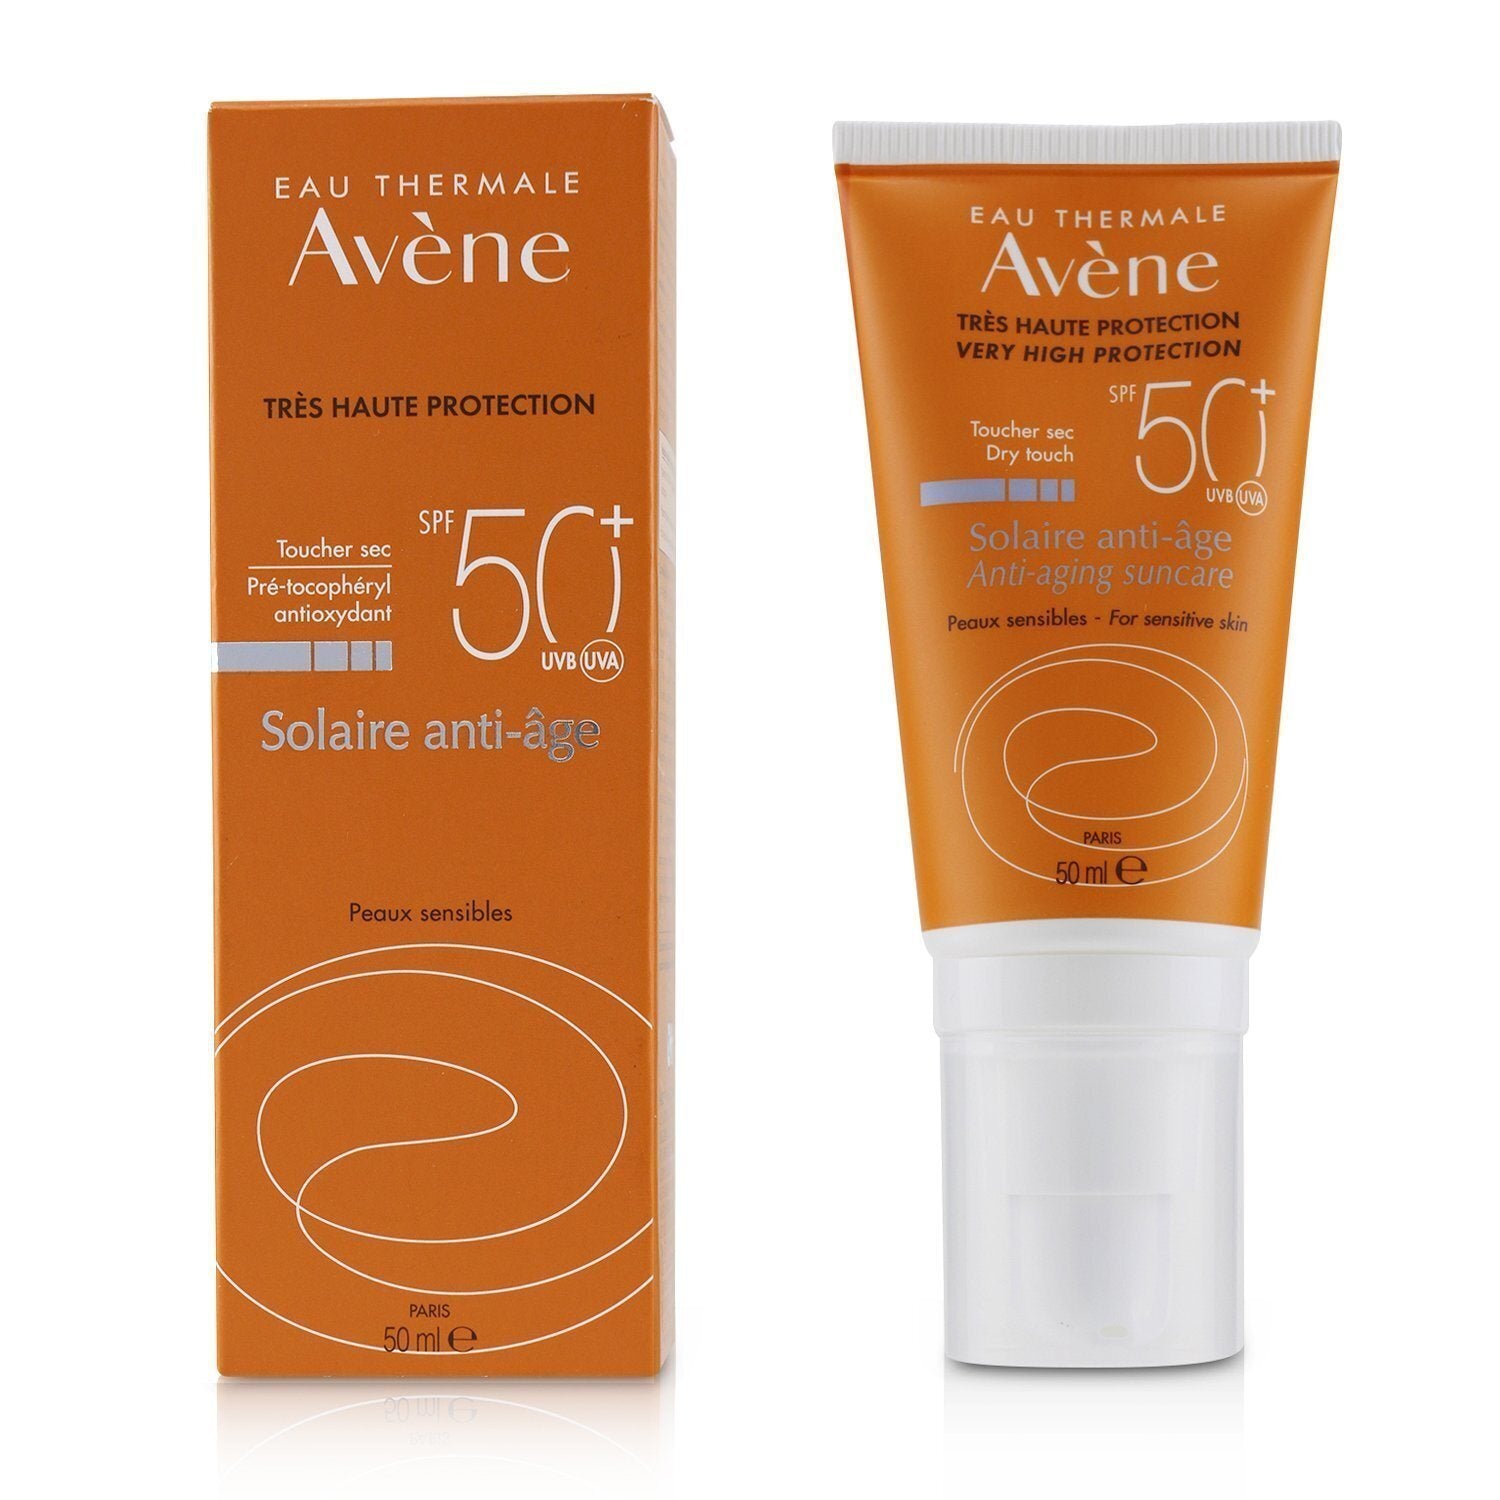 AVENE - Anti-Aging Suncare SPF 50+ - For Sensitive Skin 07265 50ml/1.7oz with important anti-aging sunscreen.